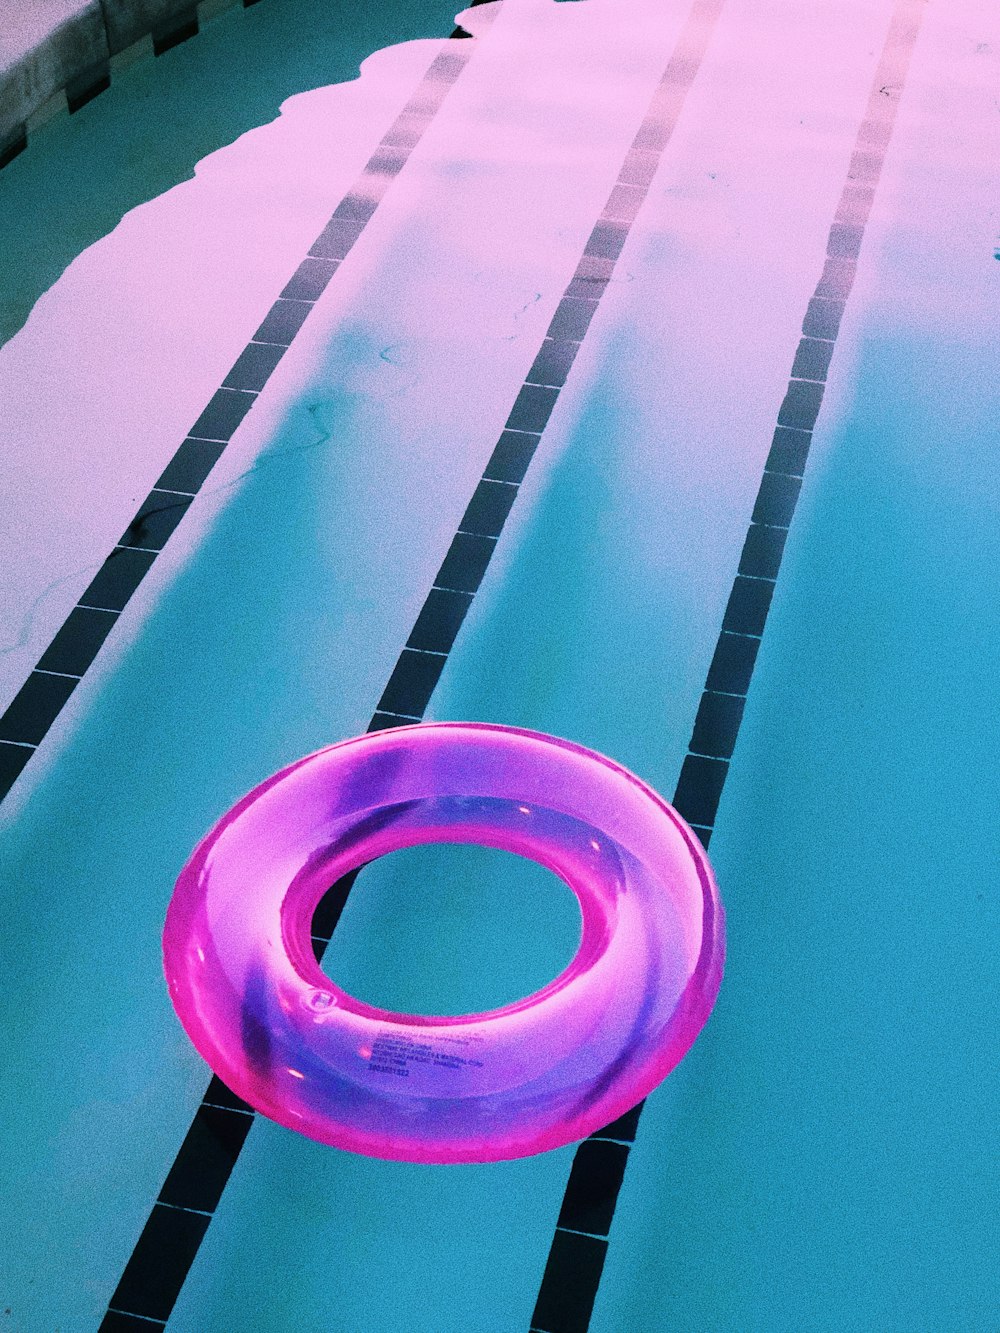 anillo inflable rosa en la piscina